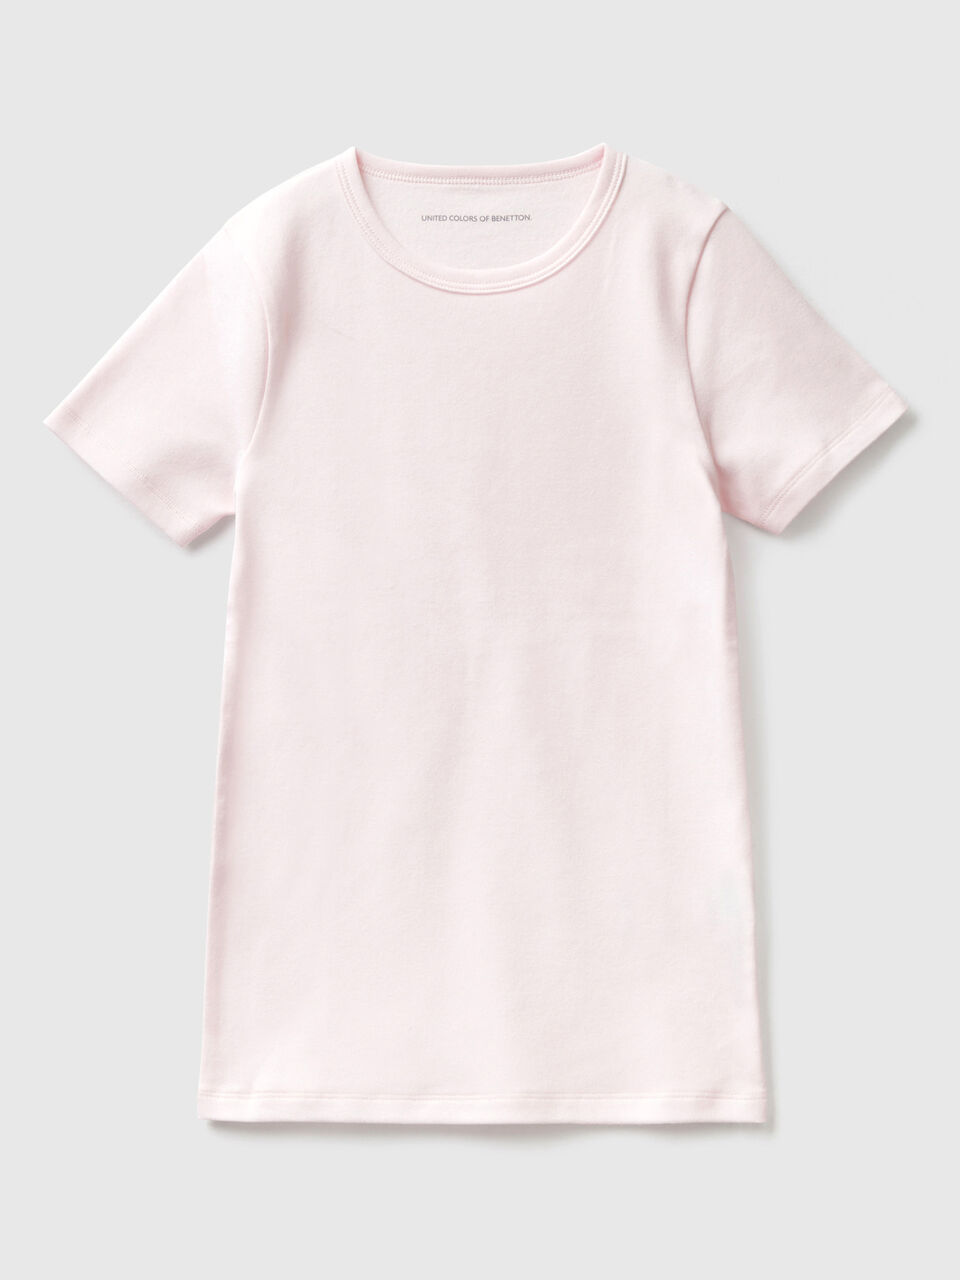 Short | in sleeve - warm Pink t-shirt cotton Benetton